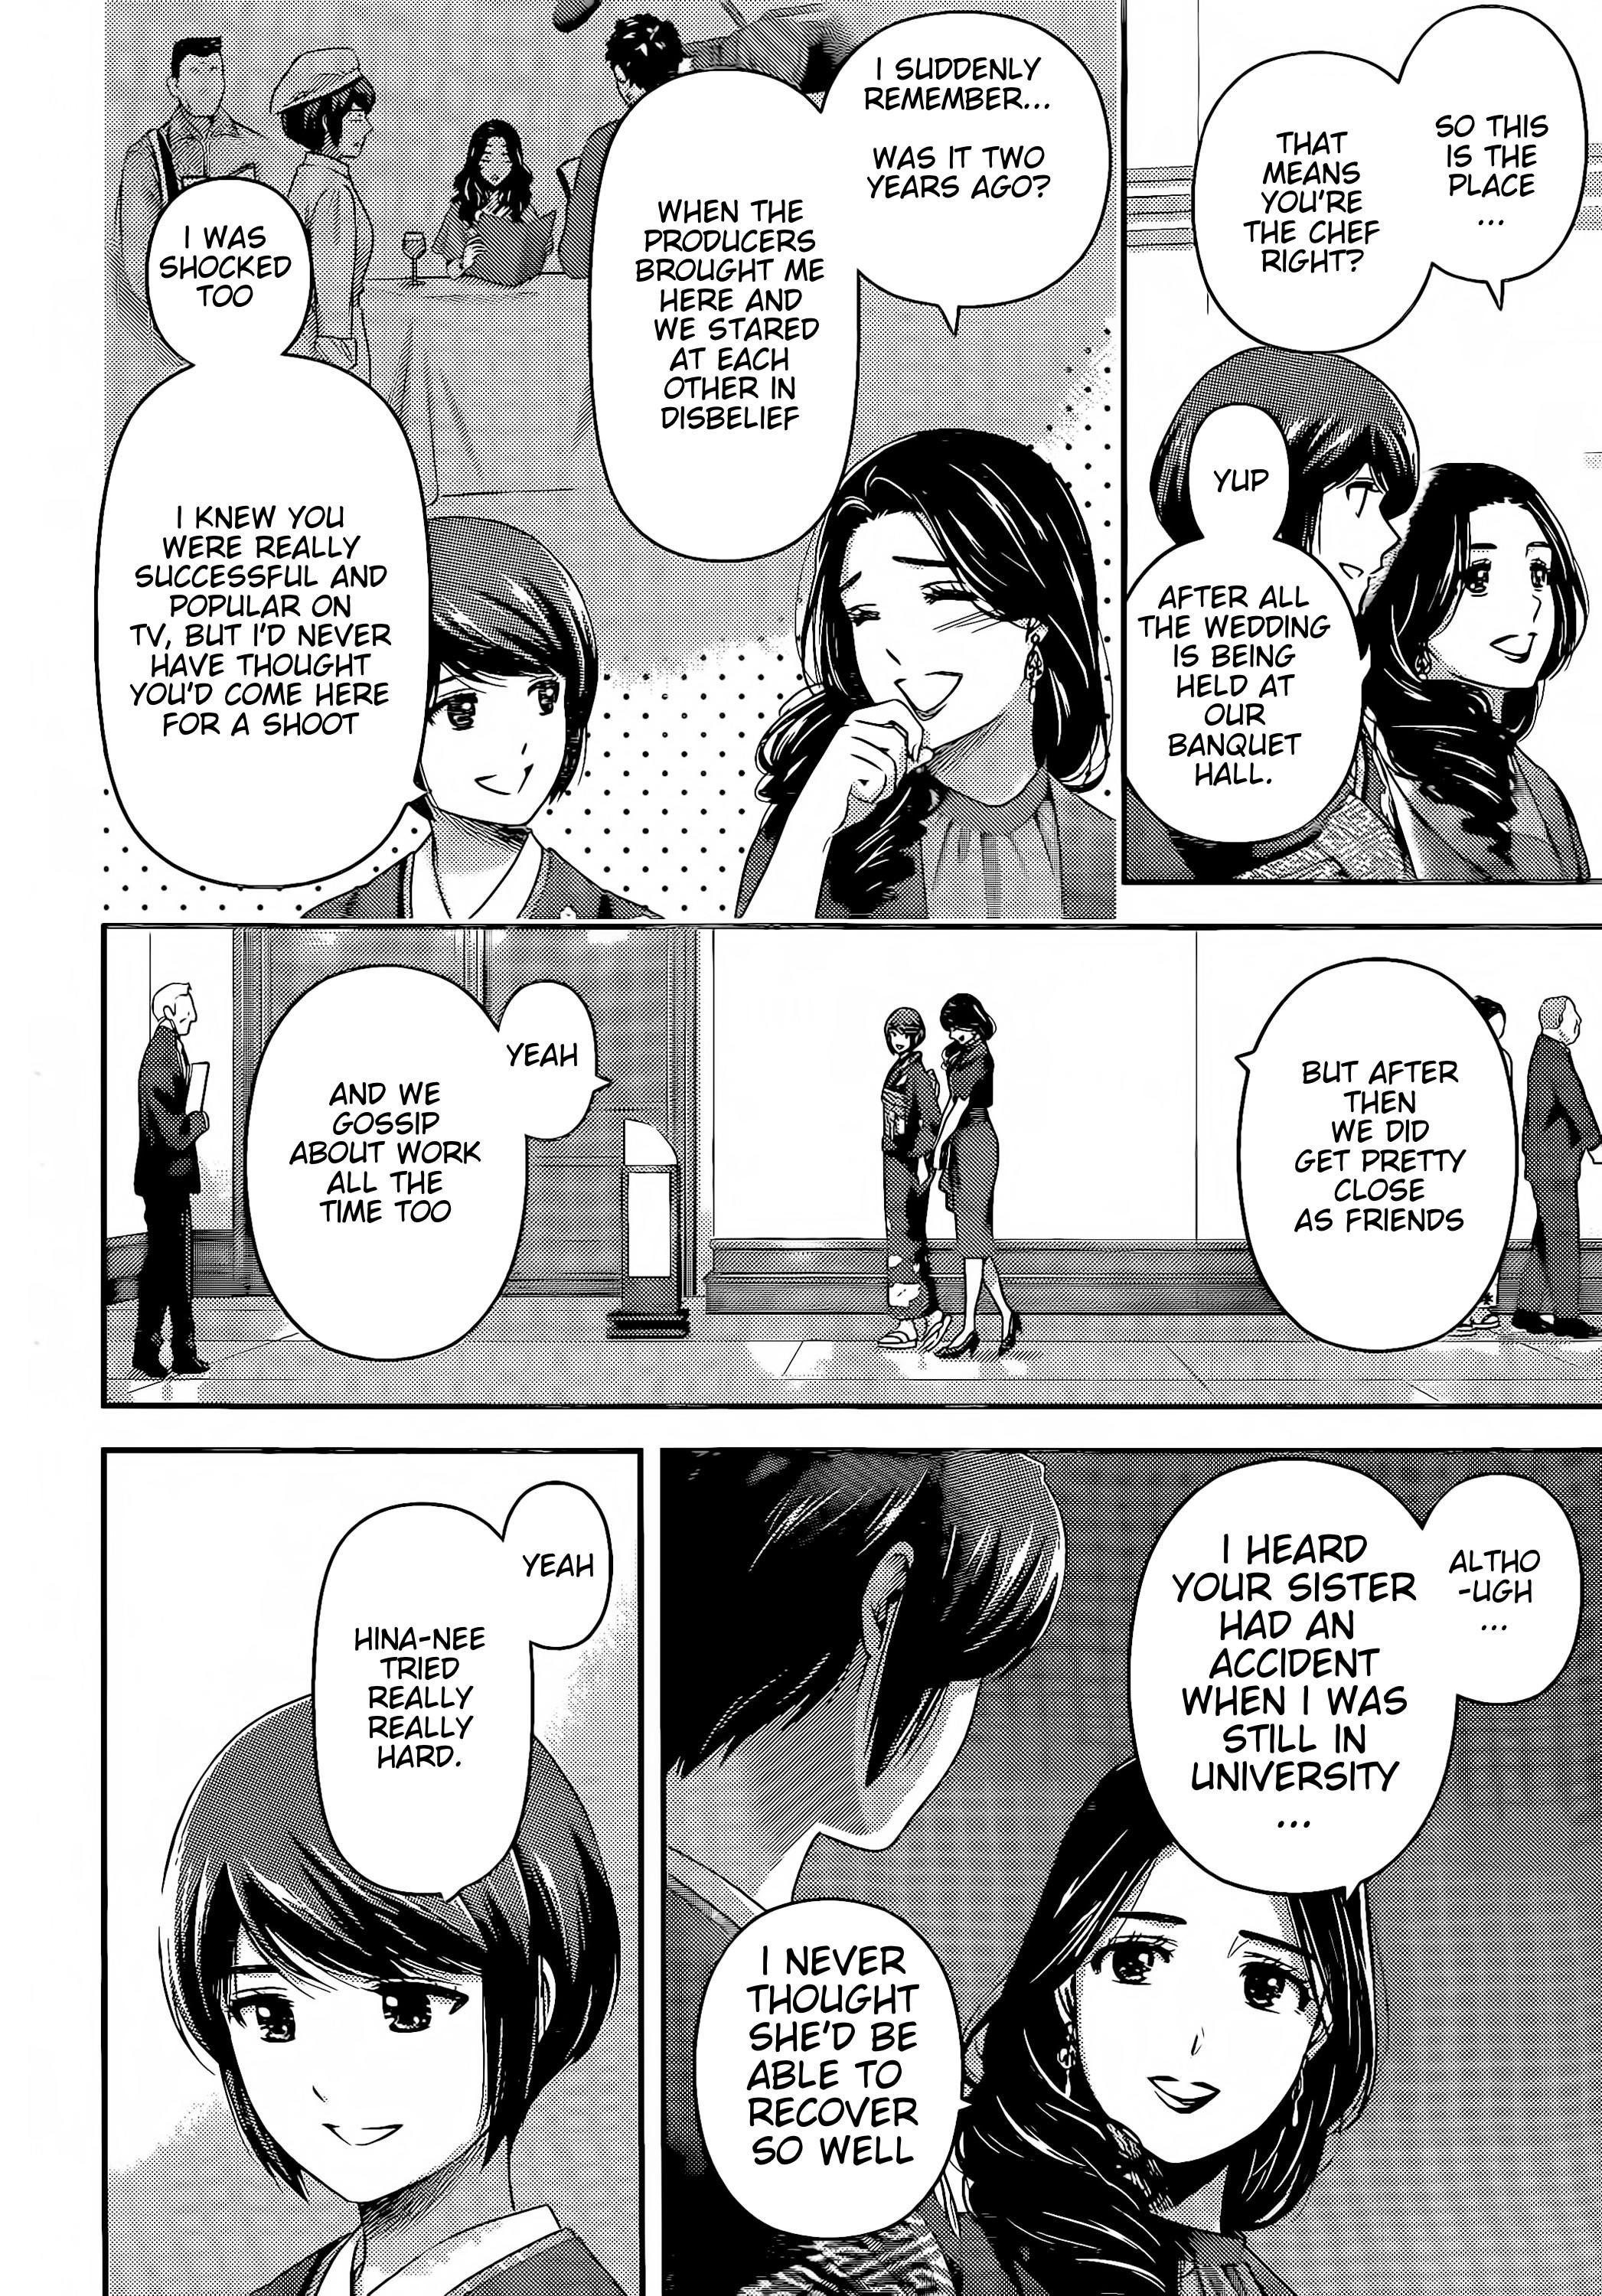 Domestic Girlfriend, Chapter 196 - Domestic Girlfriend Manga Online